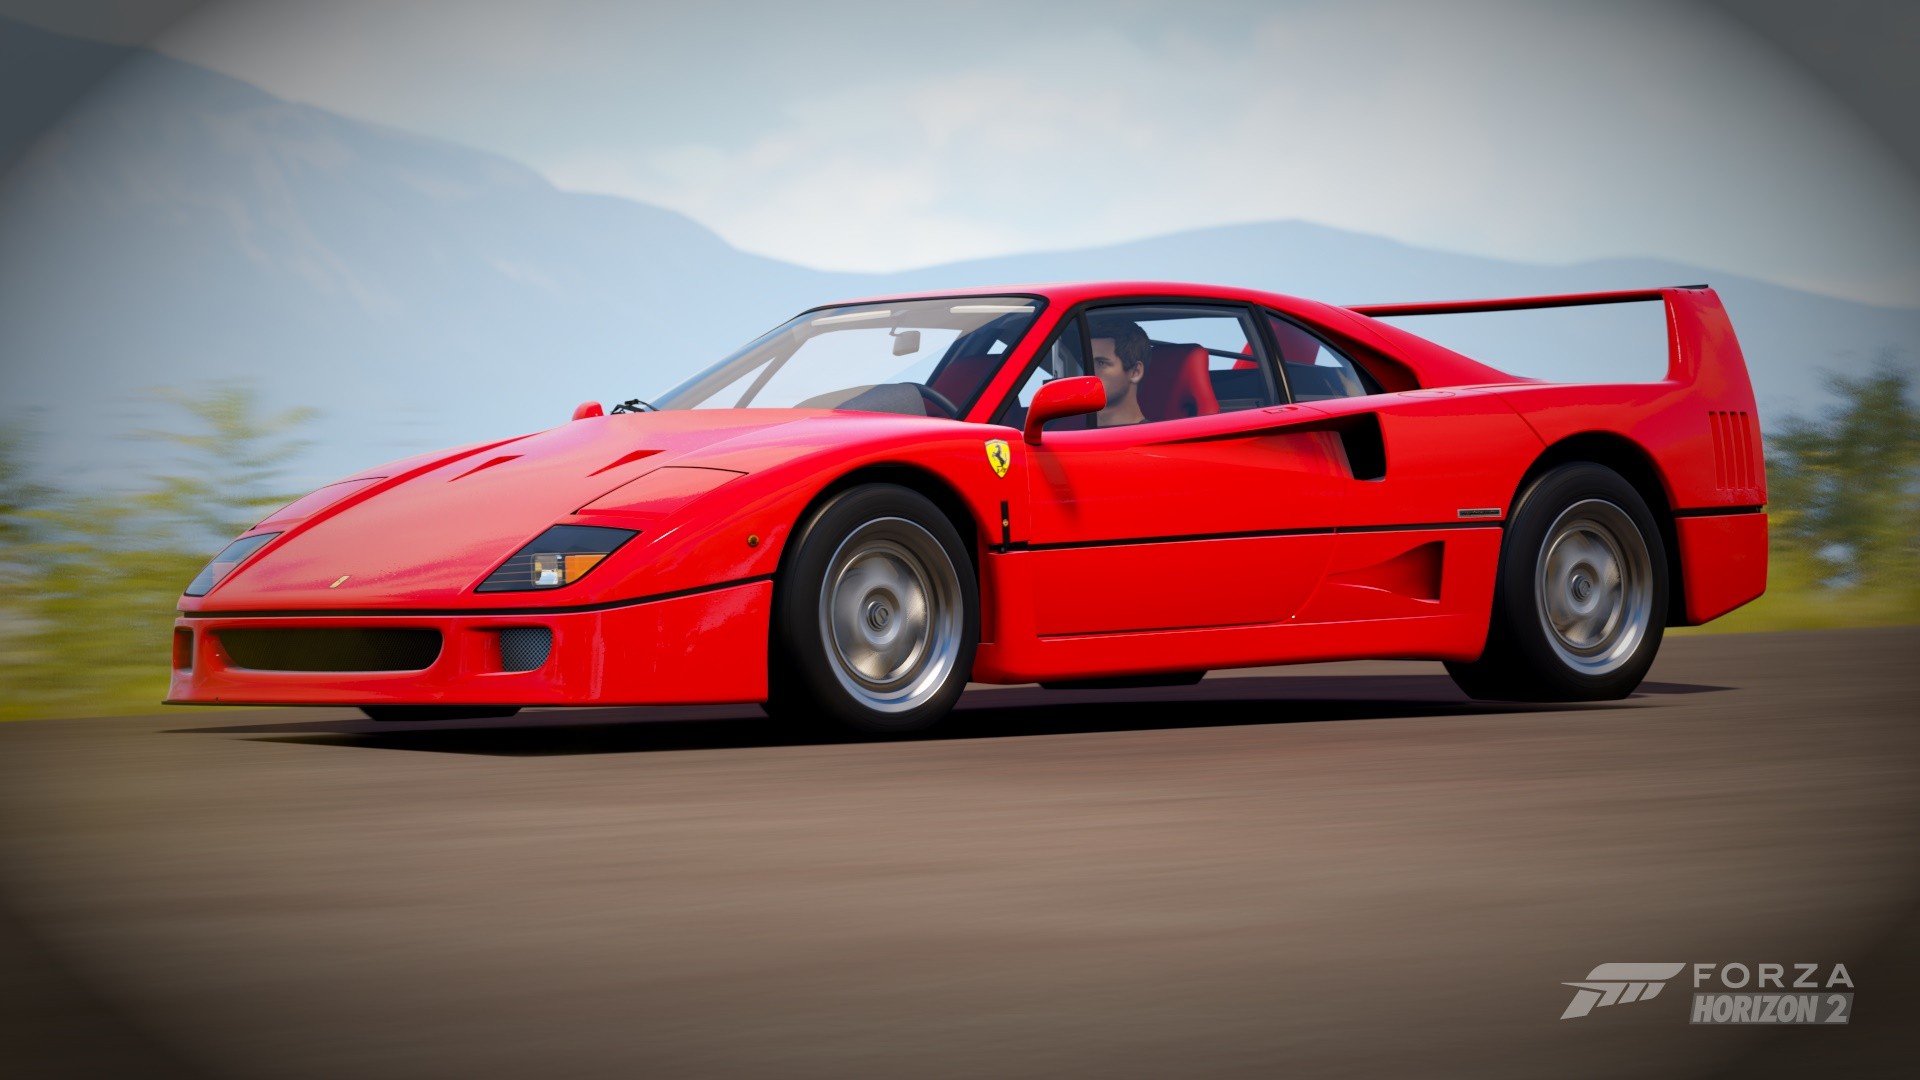 General 1920x1080 Ferrari F40 red cars pop-up headlights Ferrari car vehicle Forza Horizon 2 video games